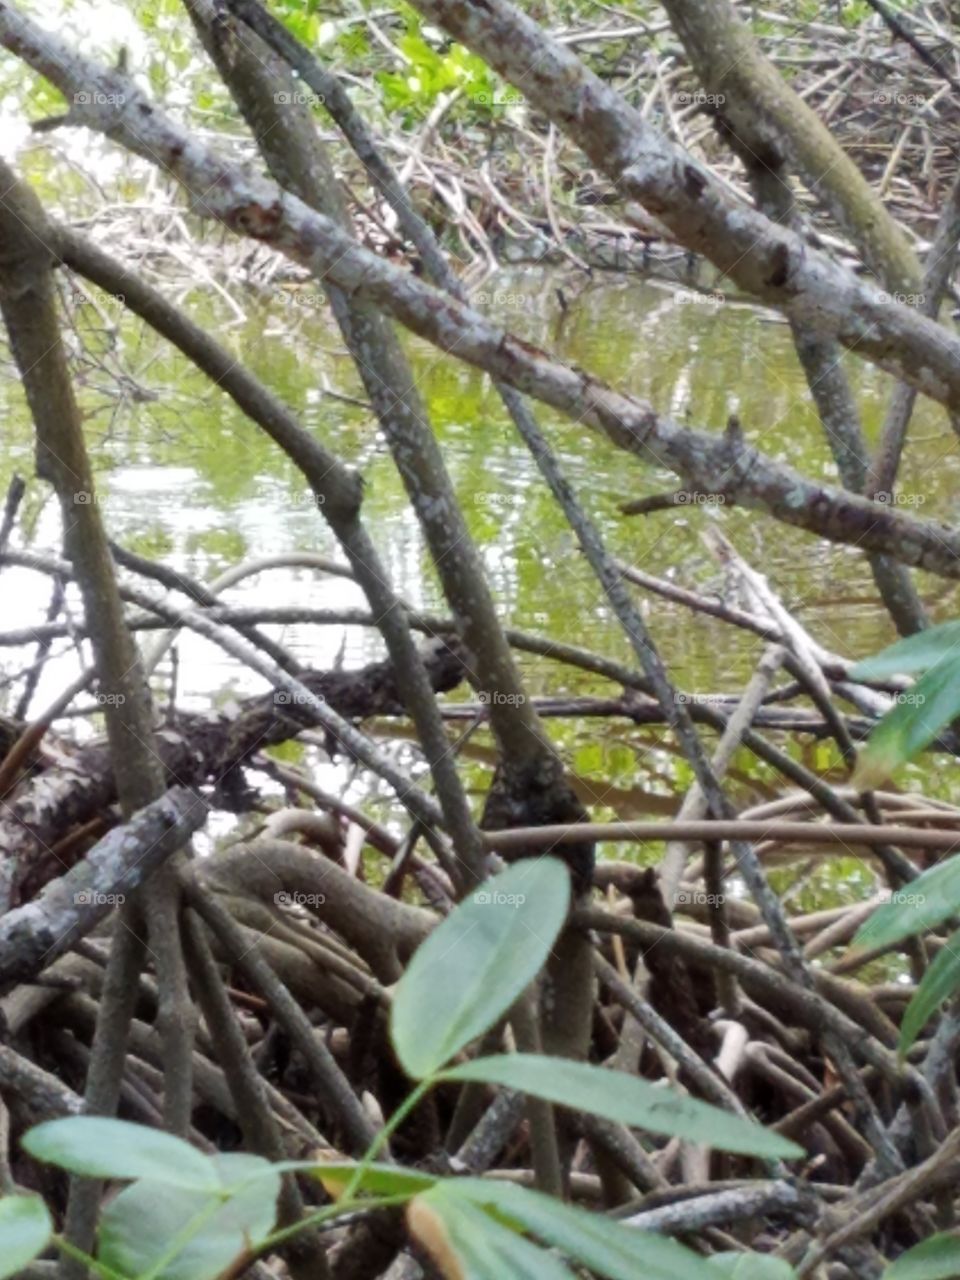 looking through mangroves